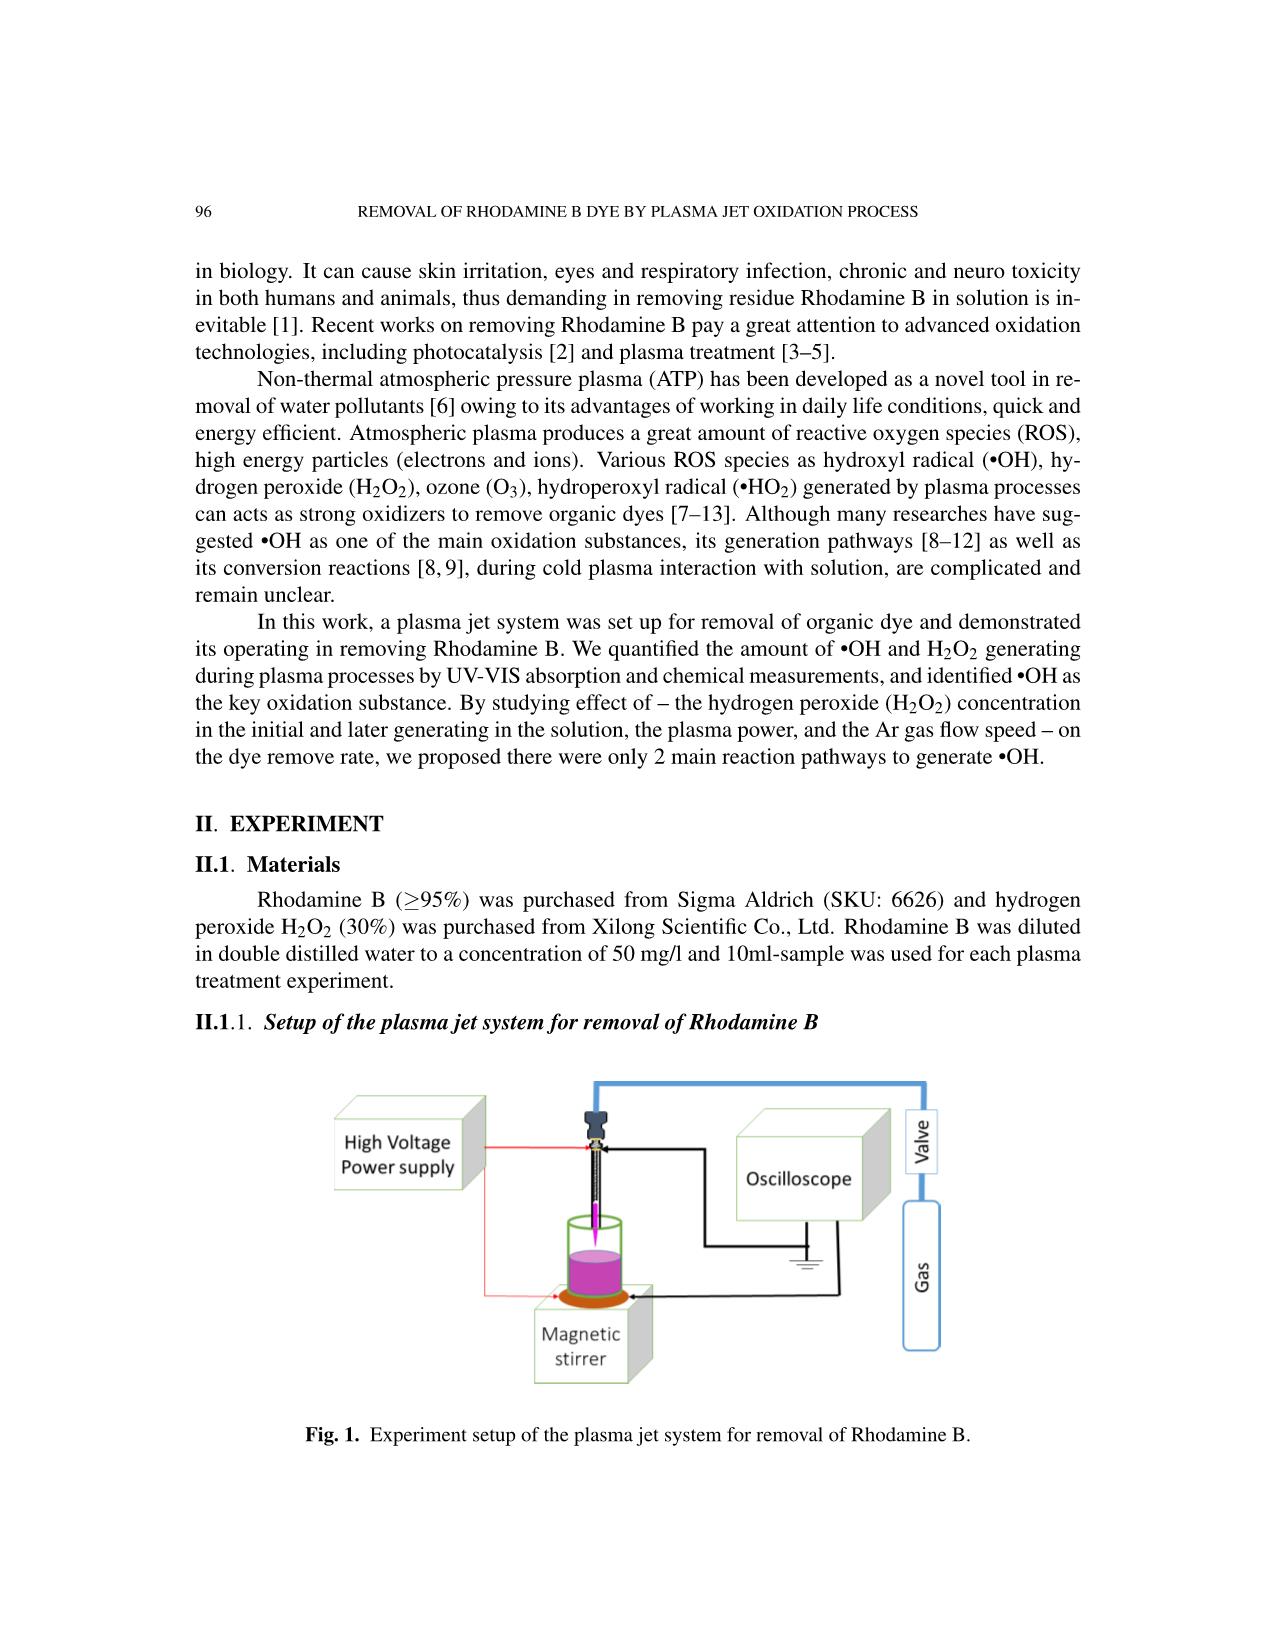 Removal of rhodamine B dye by plasma jet oxidation process trang 2